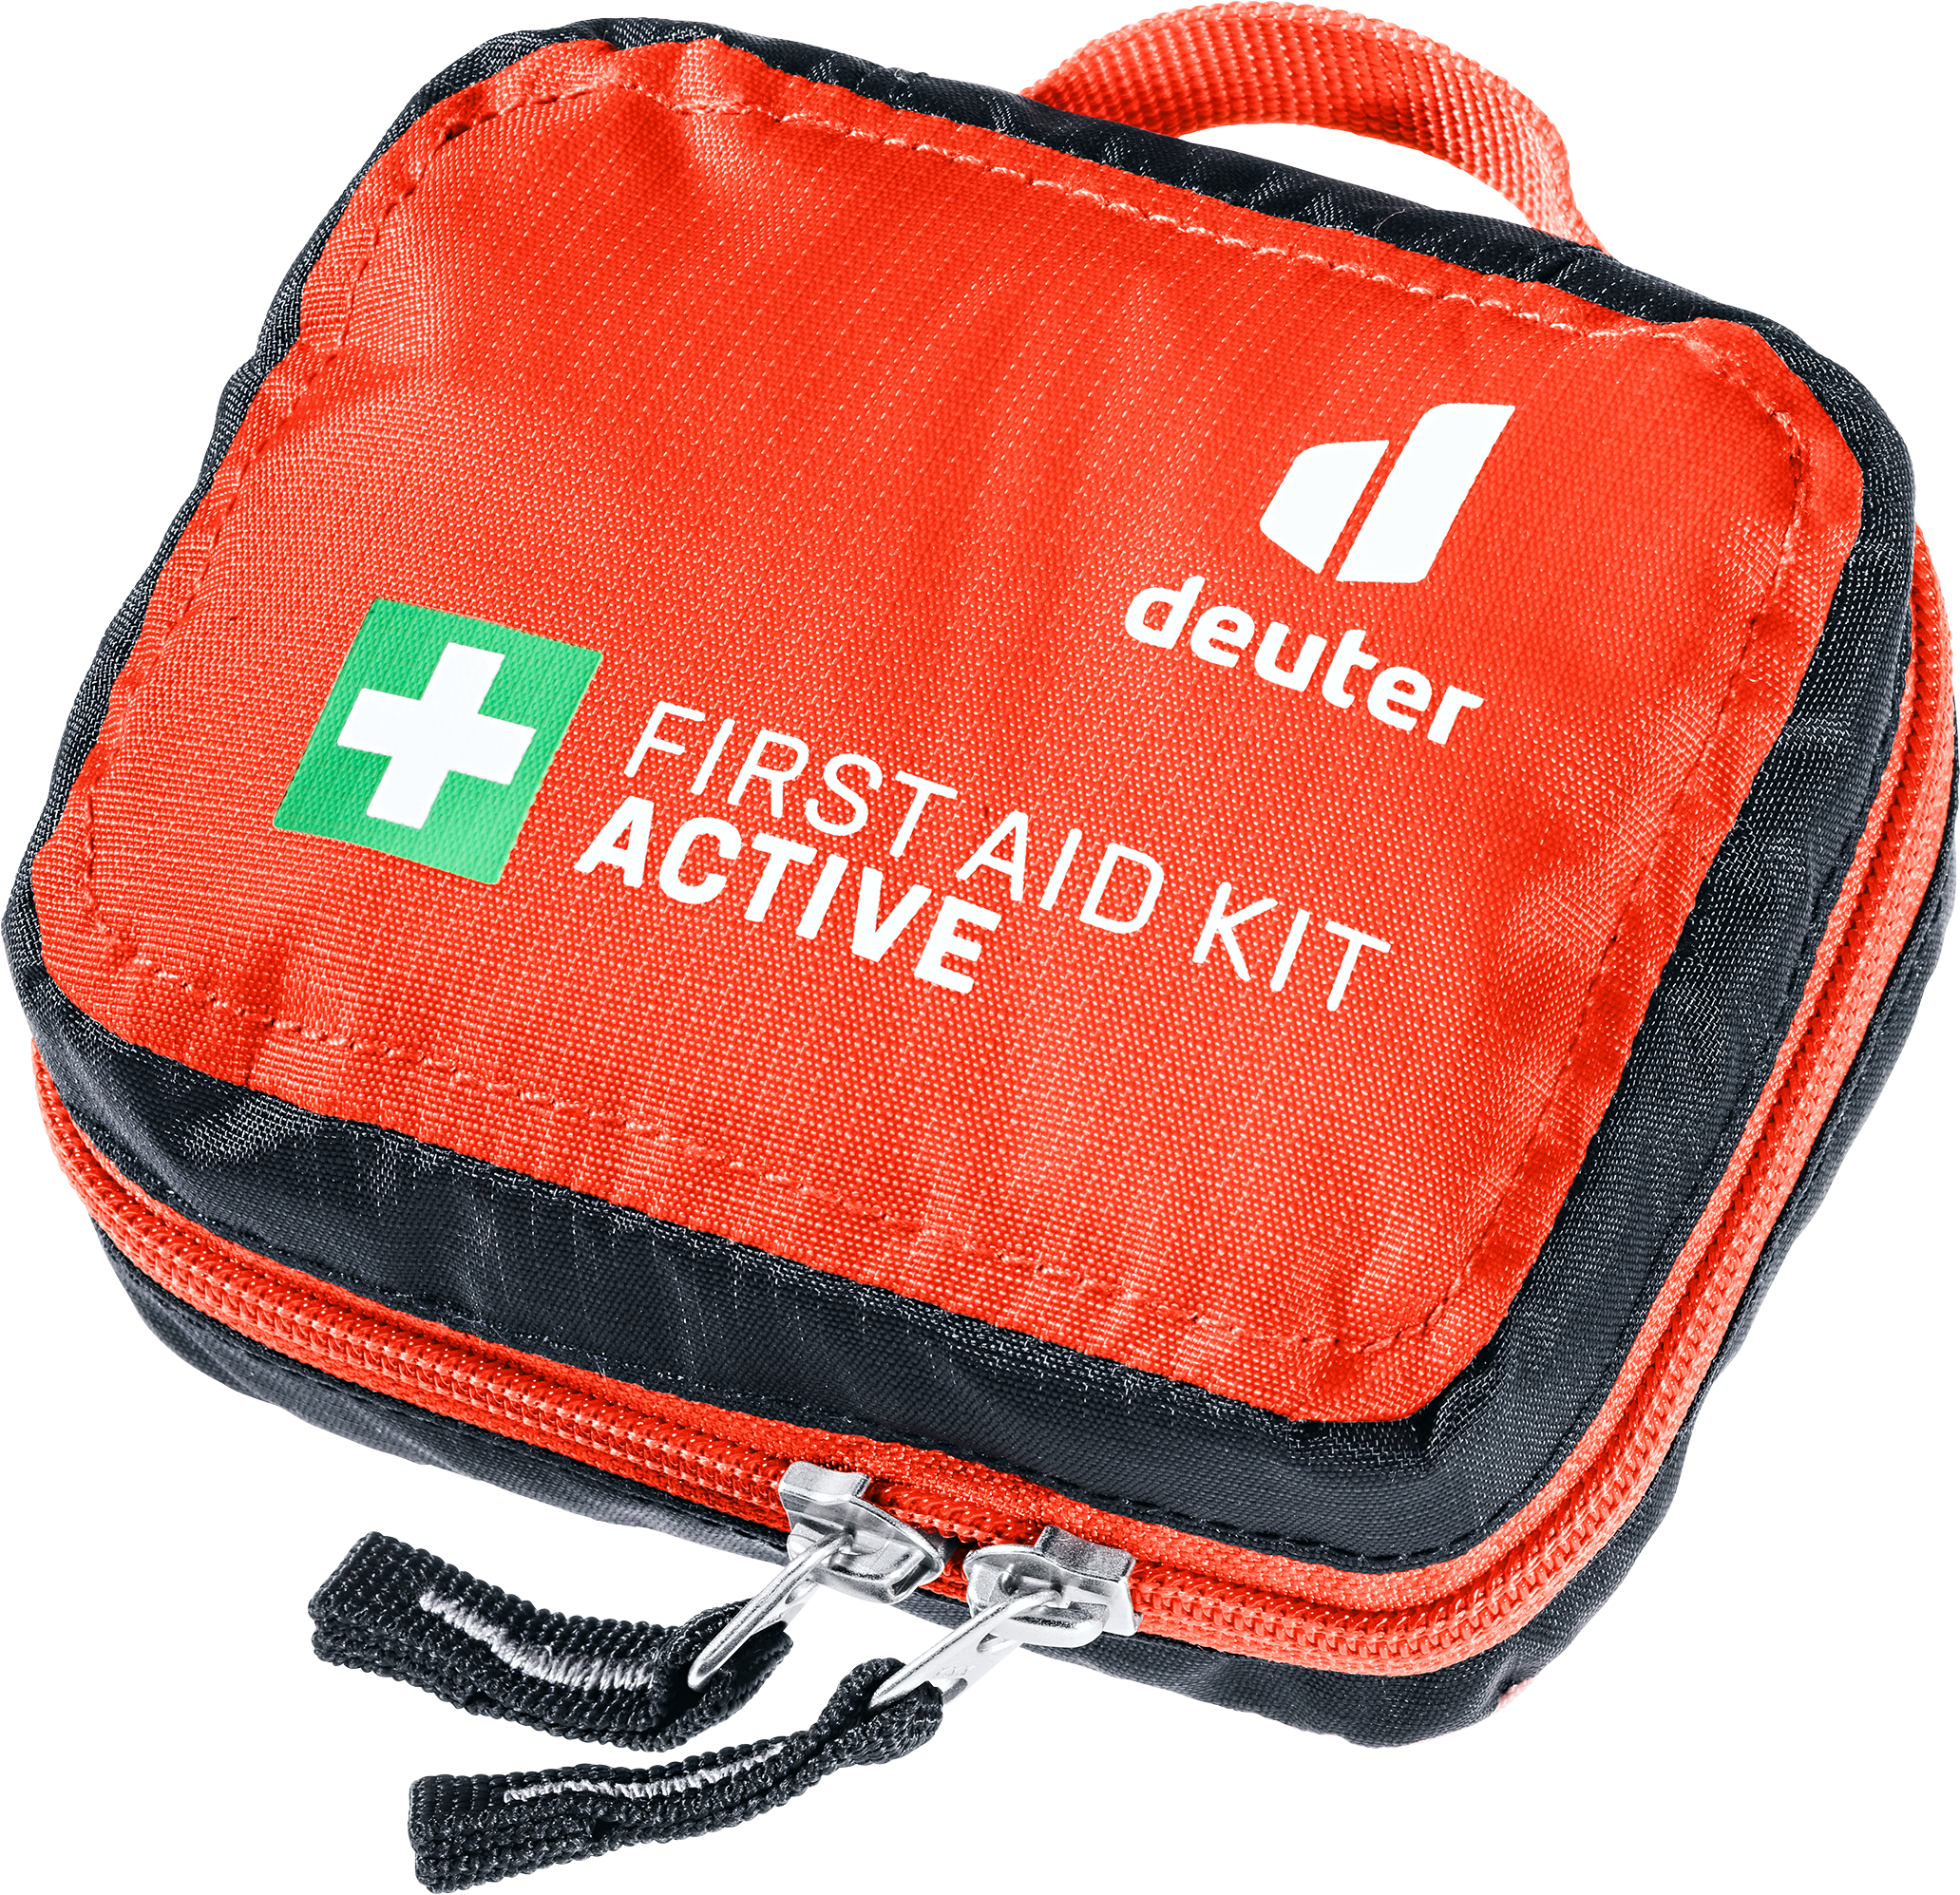 Deuter First Aid Kit Active Papaya